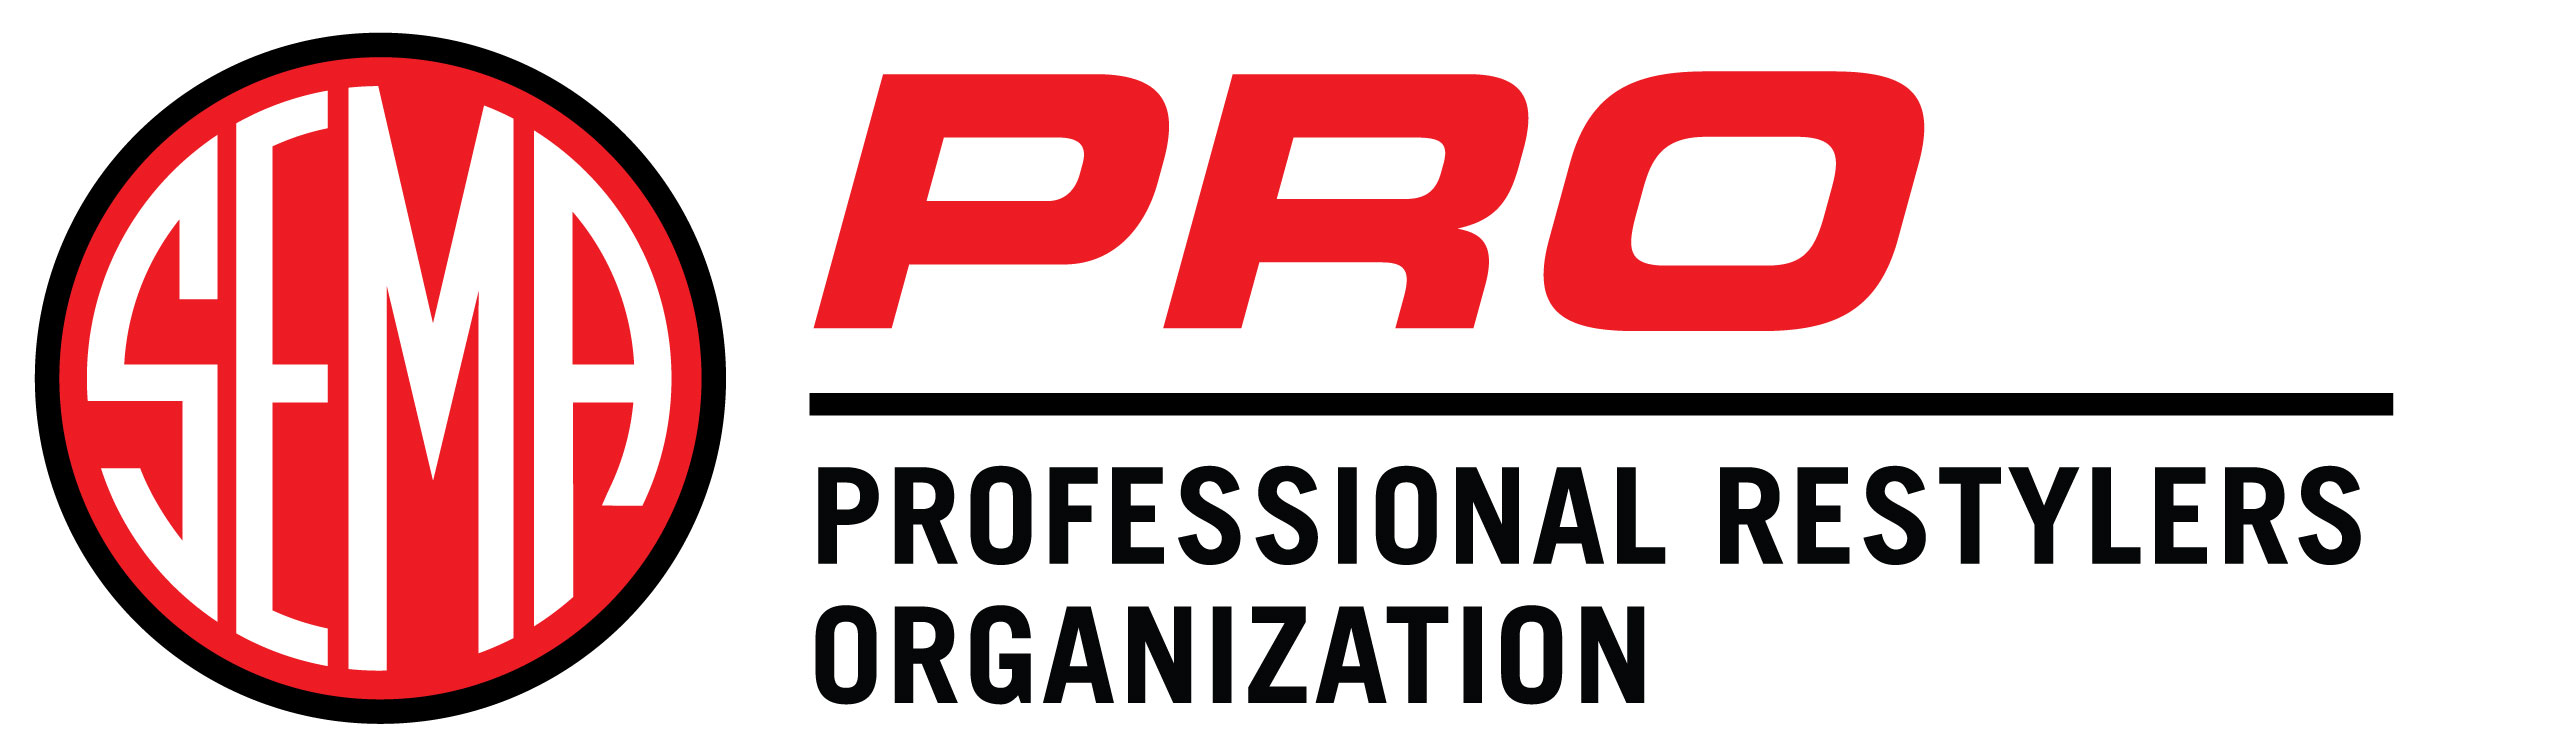 Professional Restylers Organization (PRO) - logo